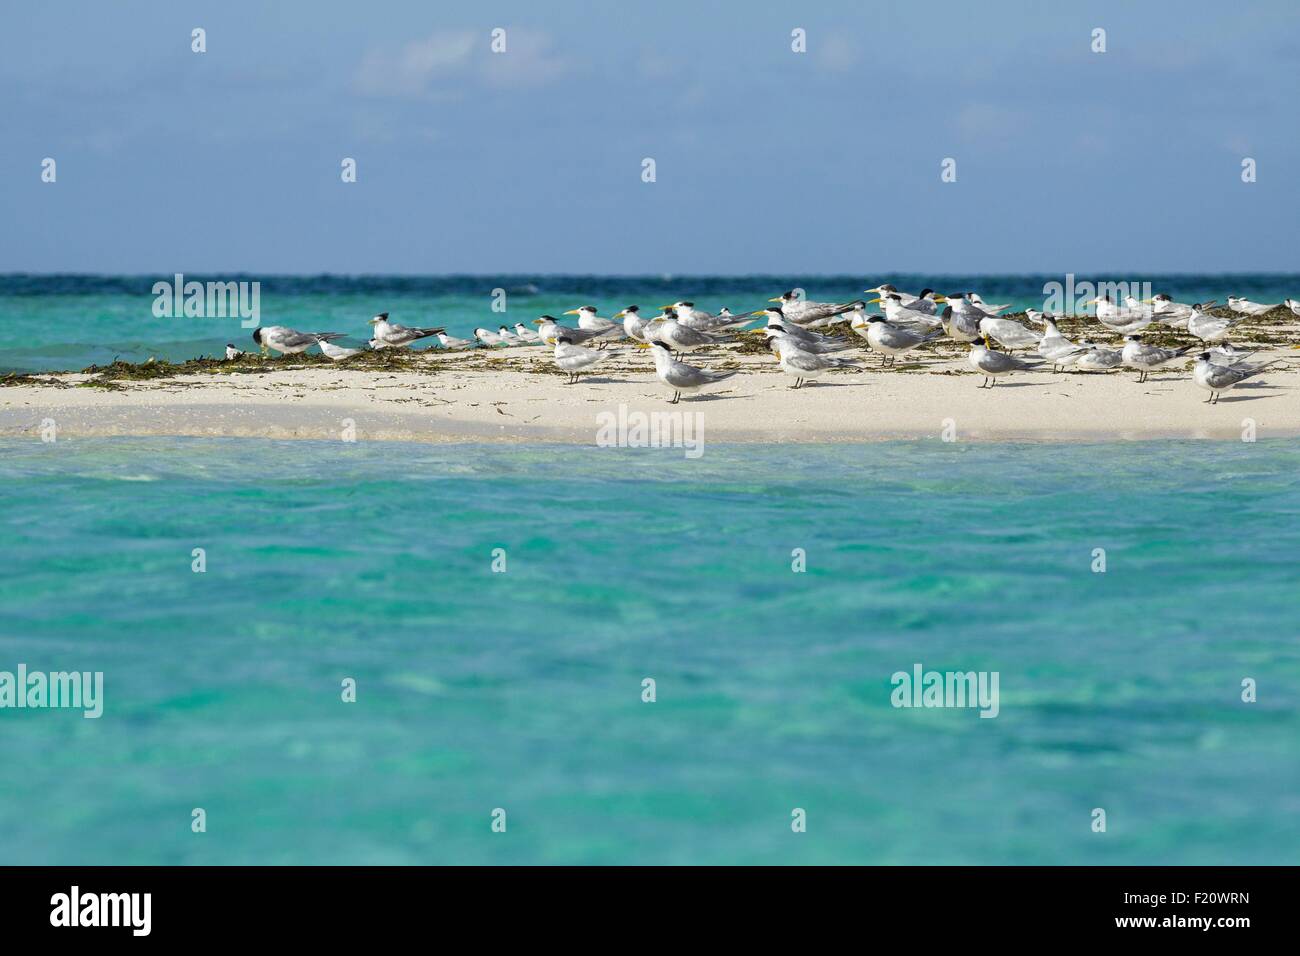 Indonesia, Maluku province, East Seram, Koon island, sea birds on a sandbank Stock Photo